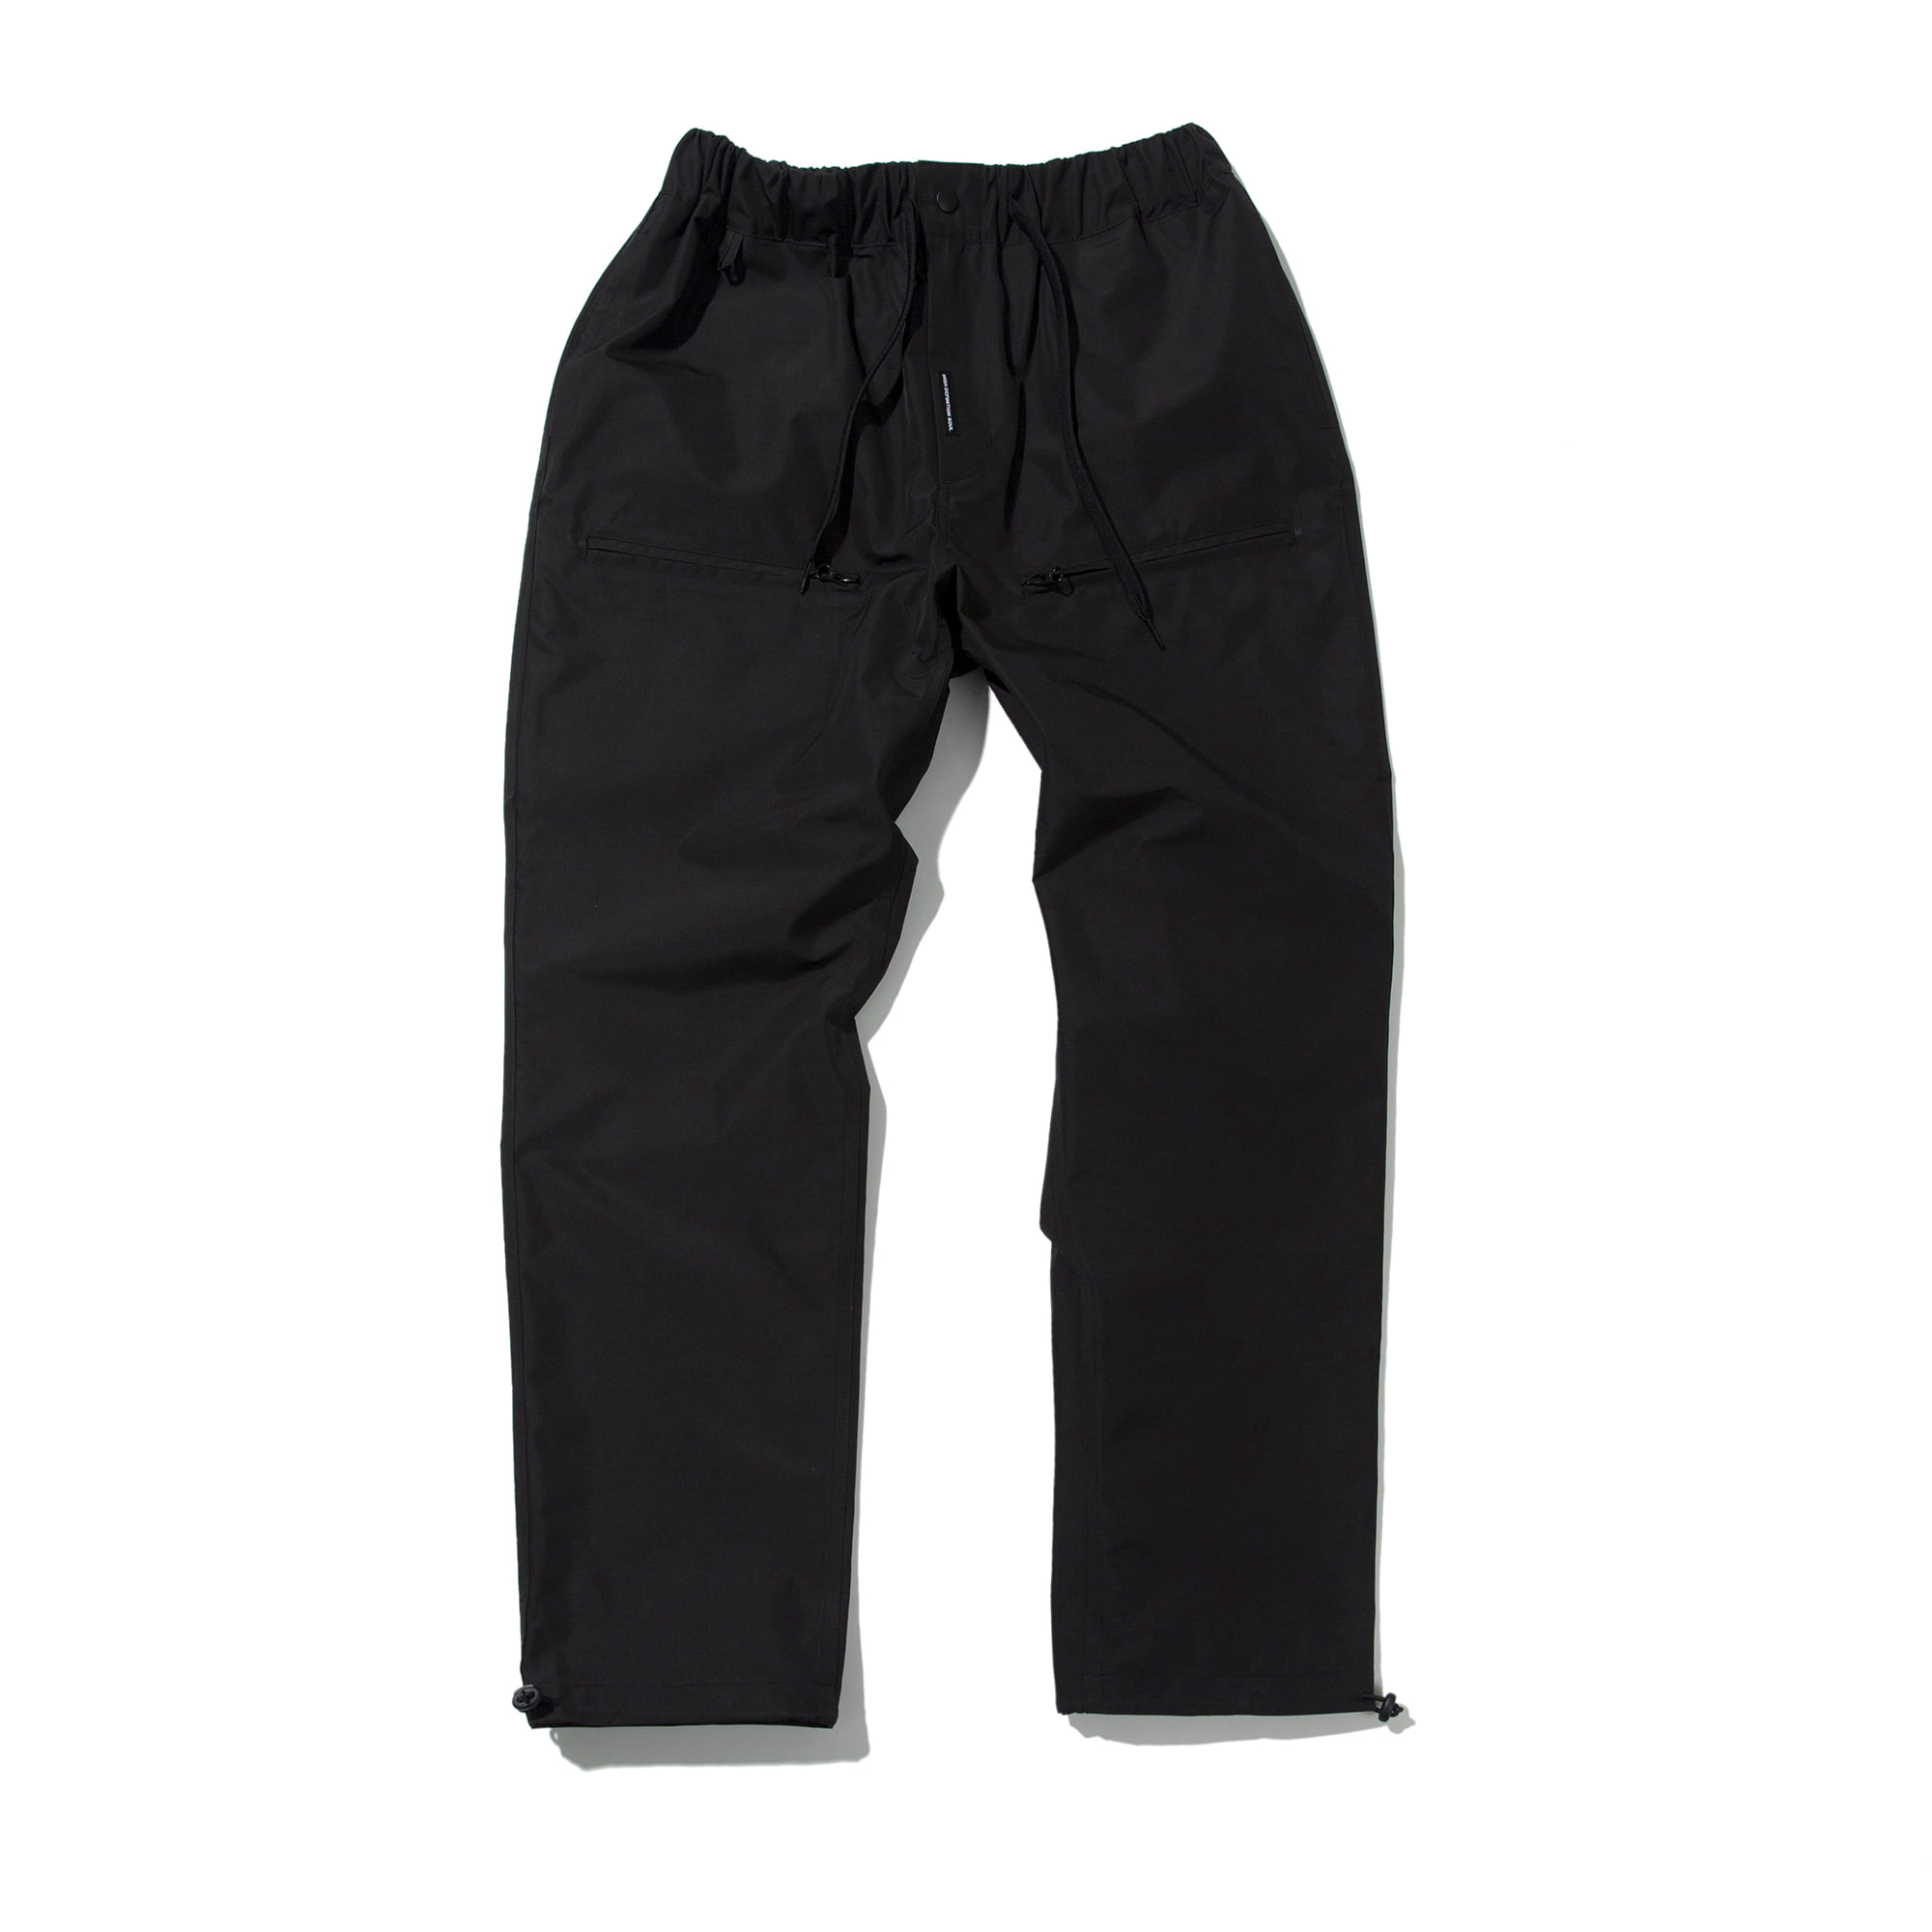 3 Layer Zip Pants - Black